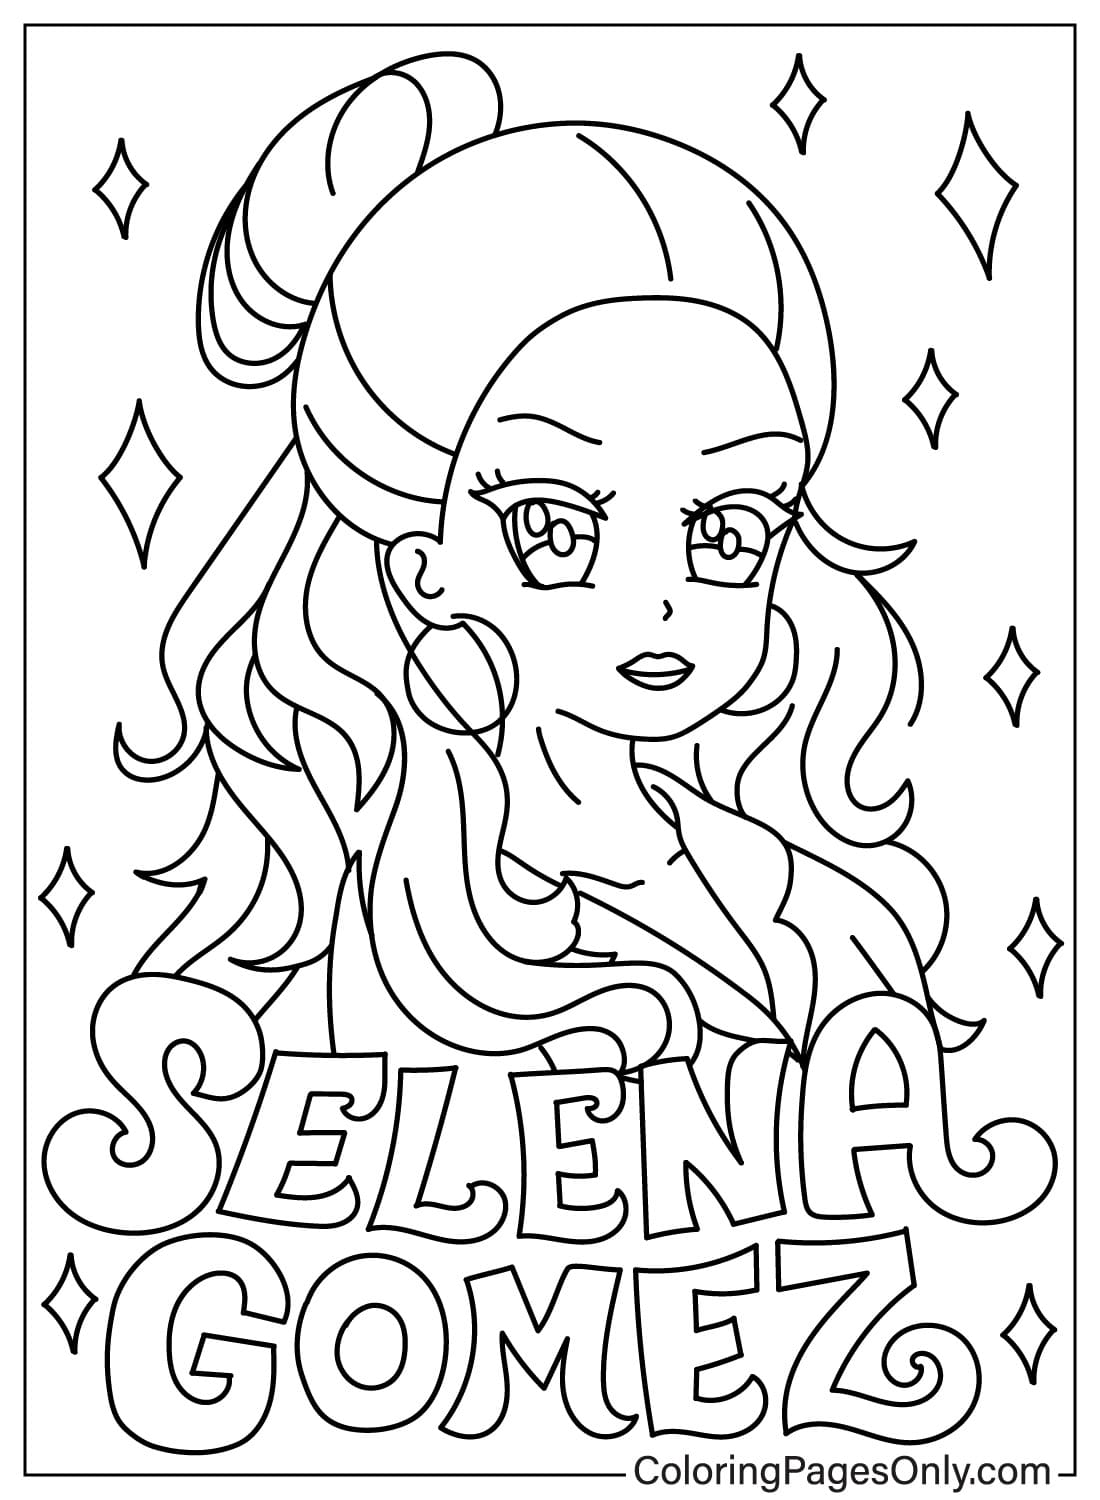 Chibi Selena Gomez Coloring Page from Selena Gomez